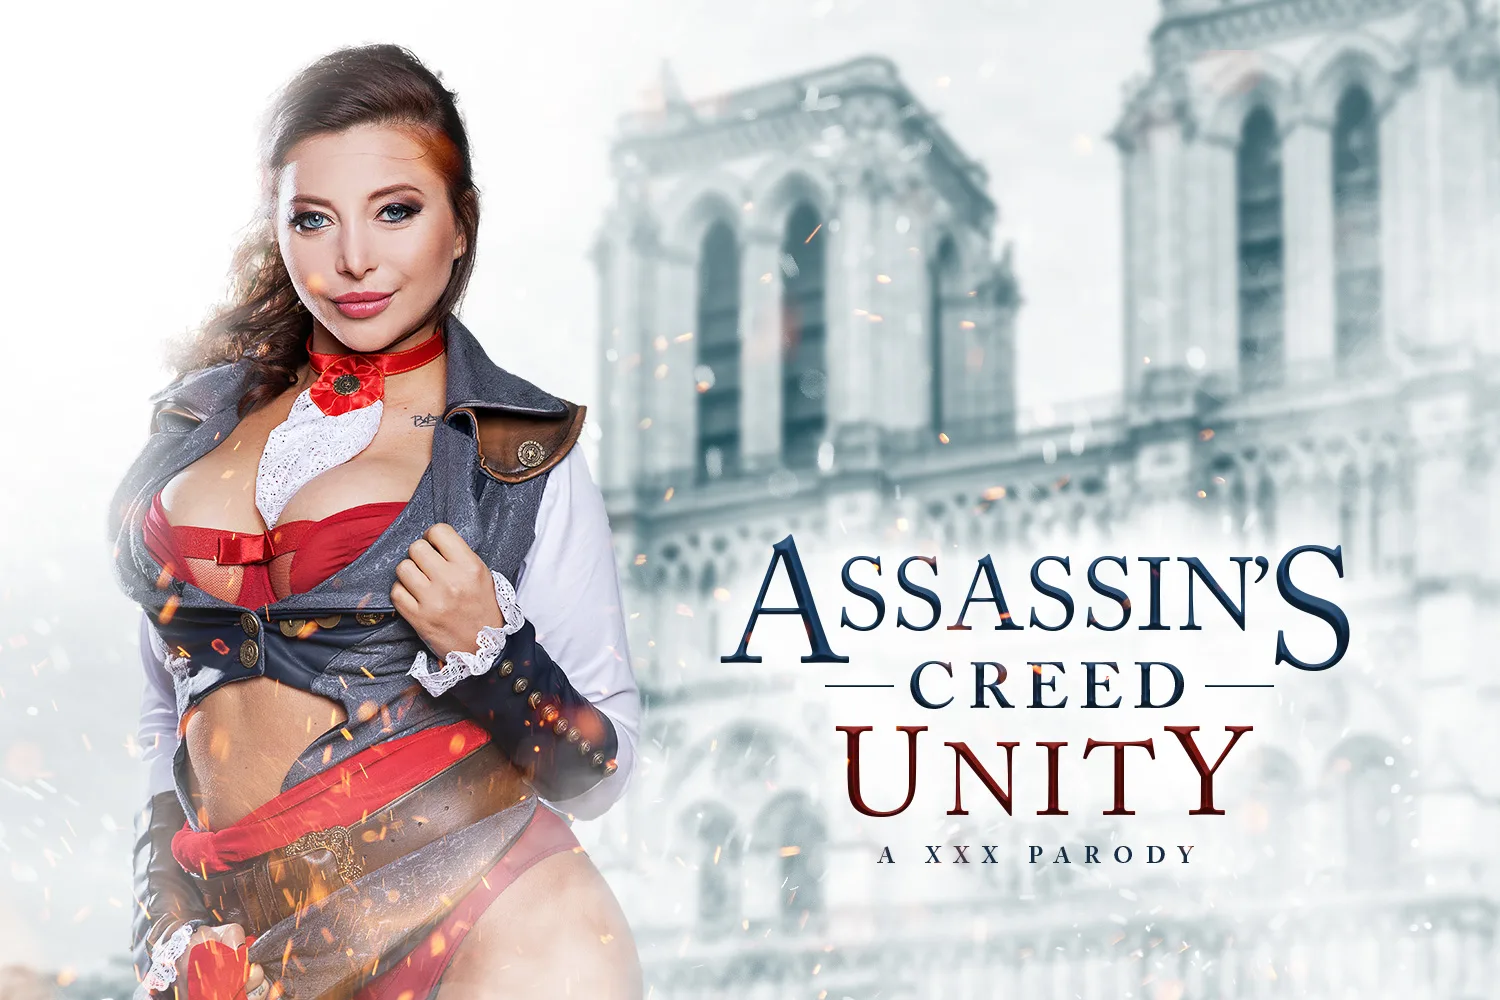 [2019-04-26] Assassins Creed: Unity A XXX Parody - VRCosplayX